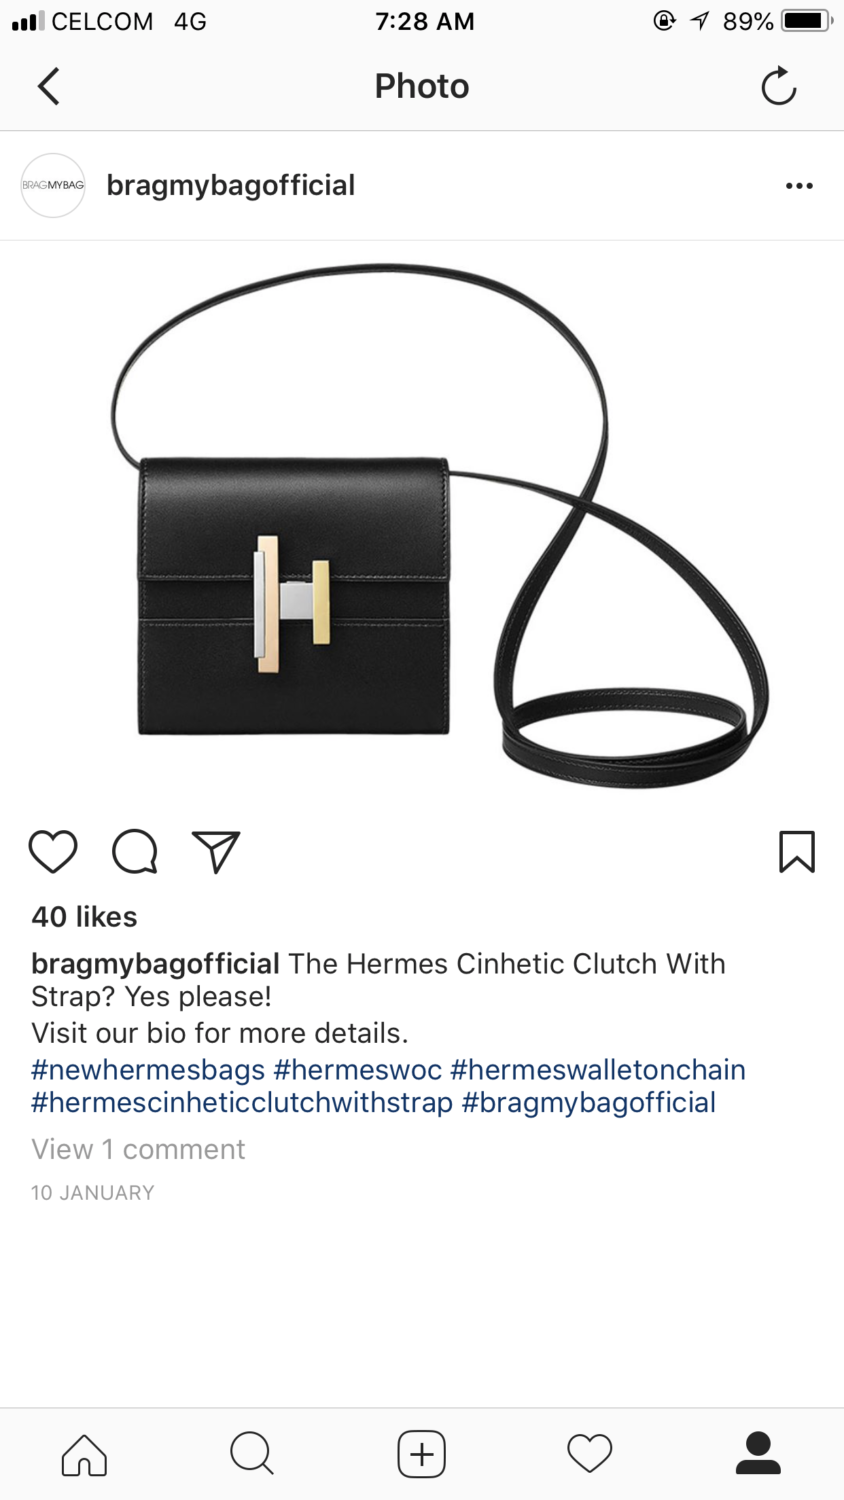 Hermes Cinhetic Clutch With Strap | Bragmybag